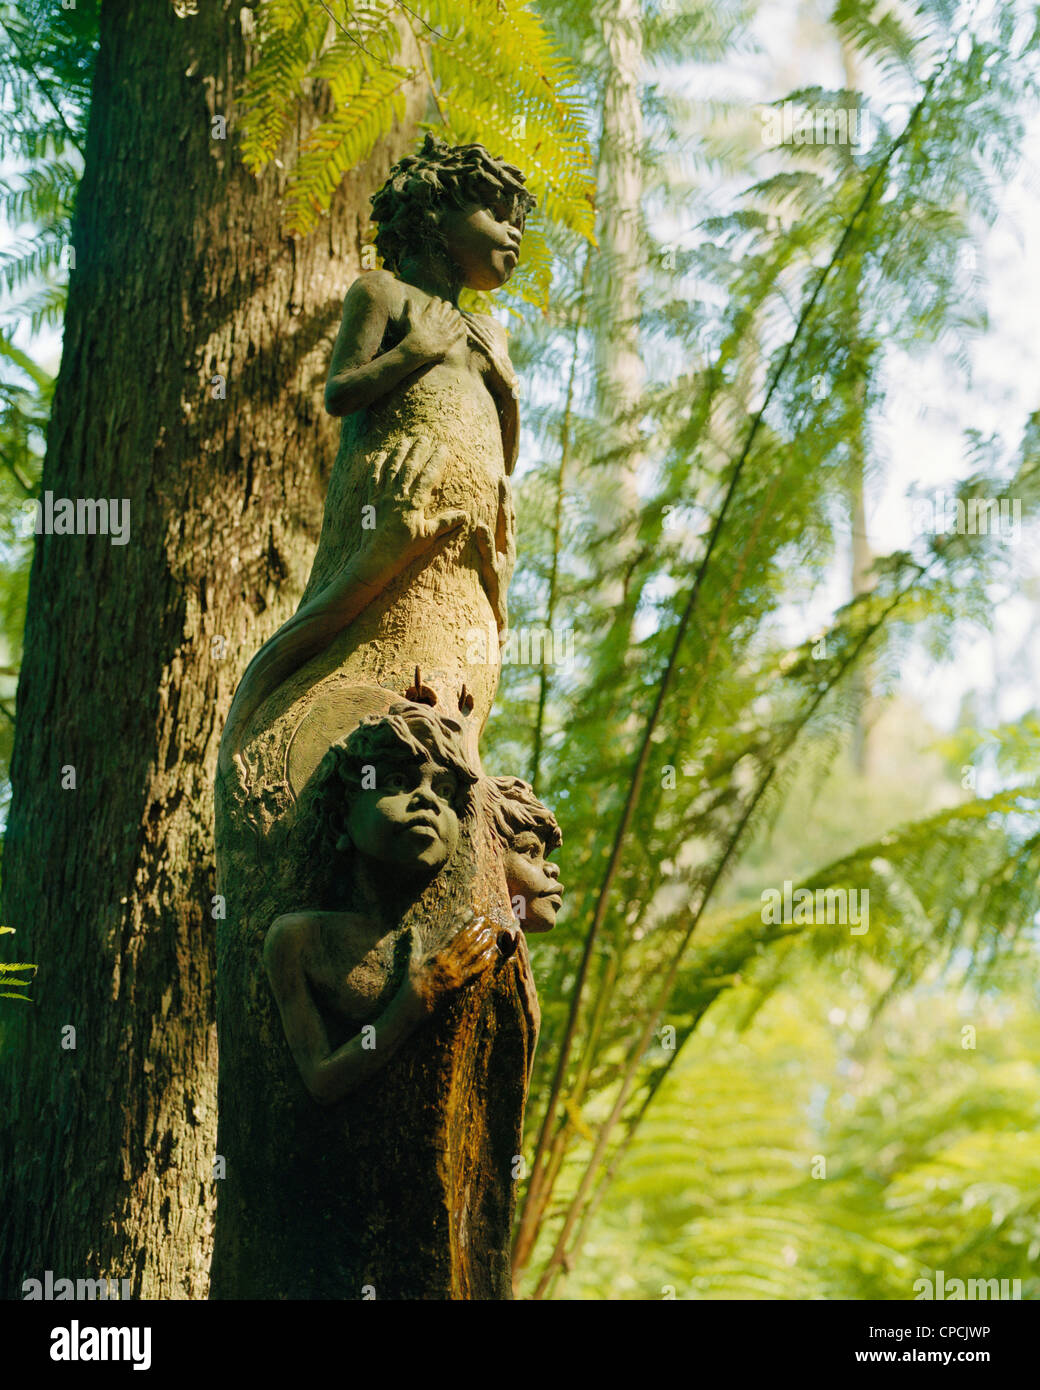 Faces of Aborigine chlidren carved into tree trunk at William Ricketts Sanctuary Dandenong Hills Australia Stock Photo